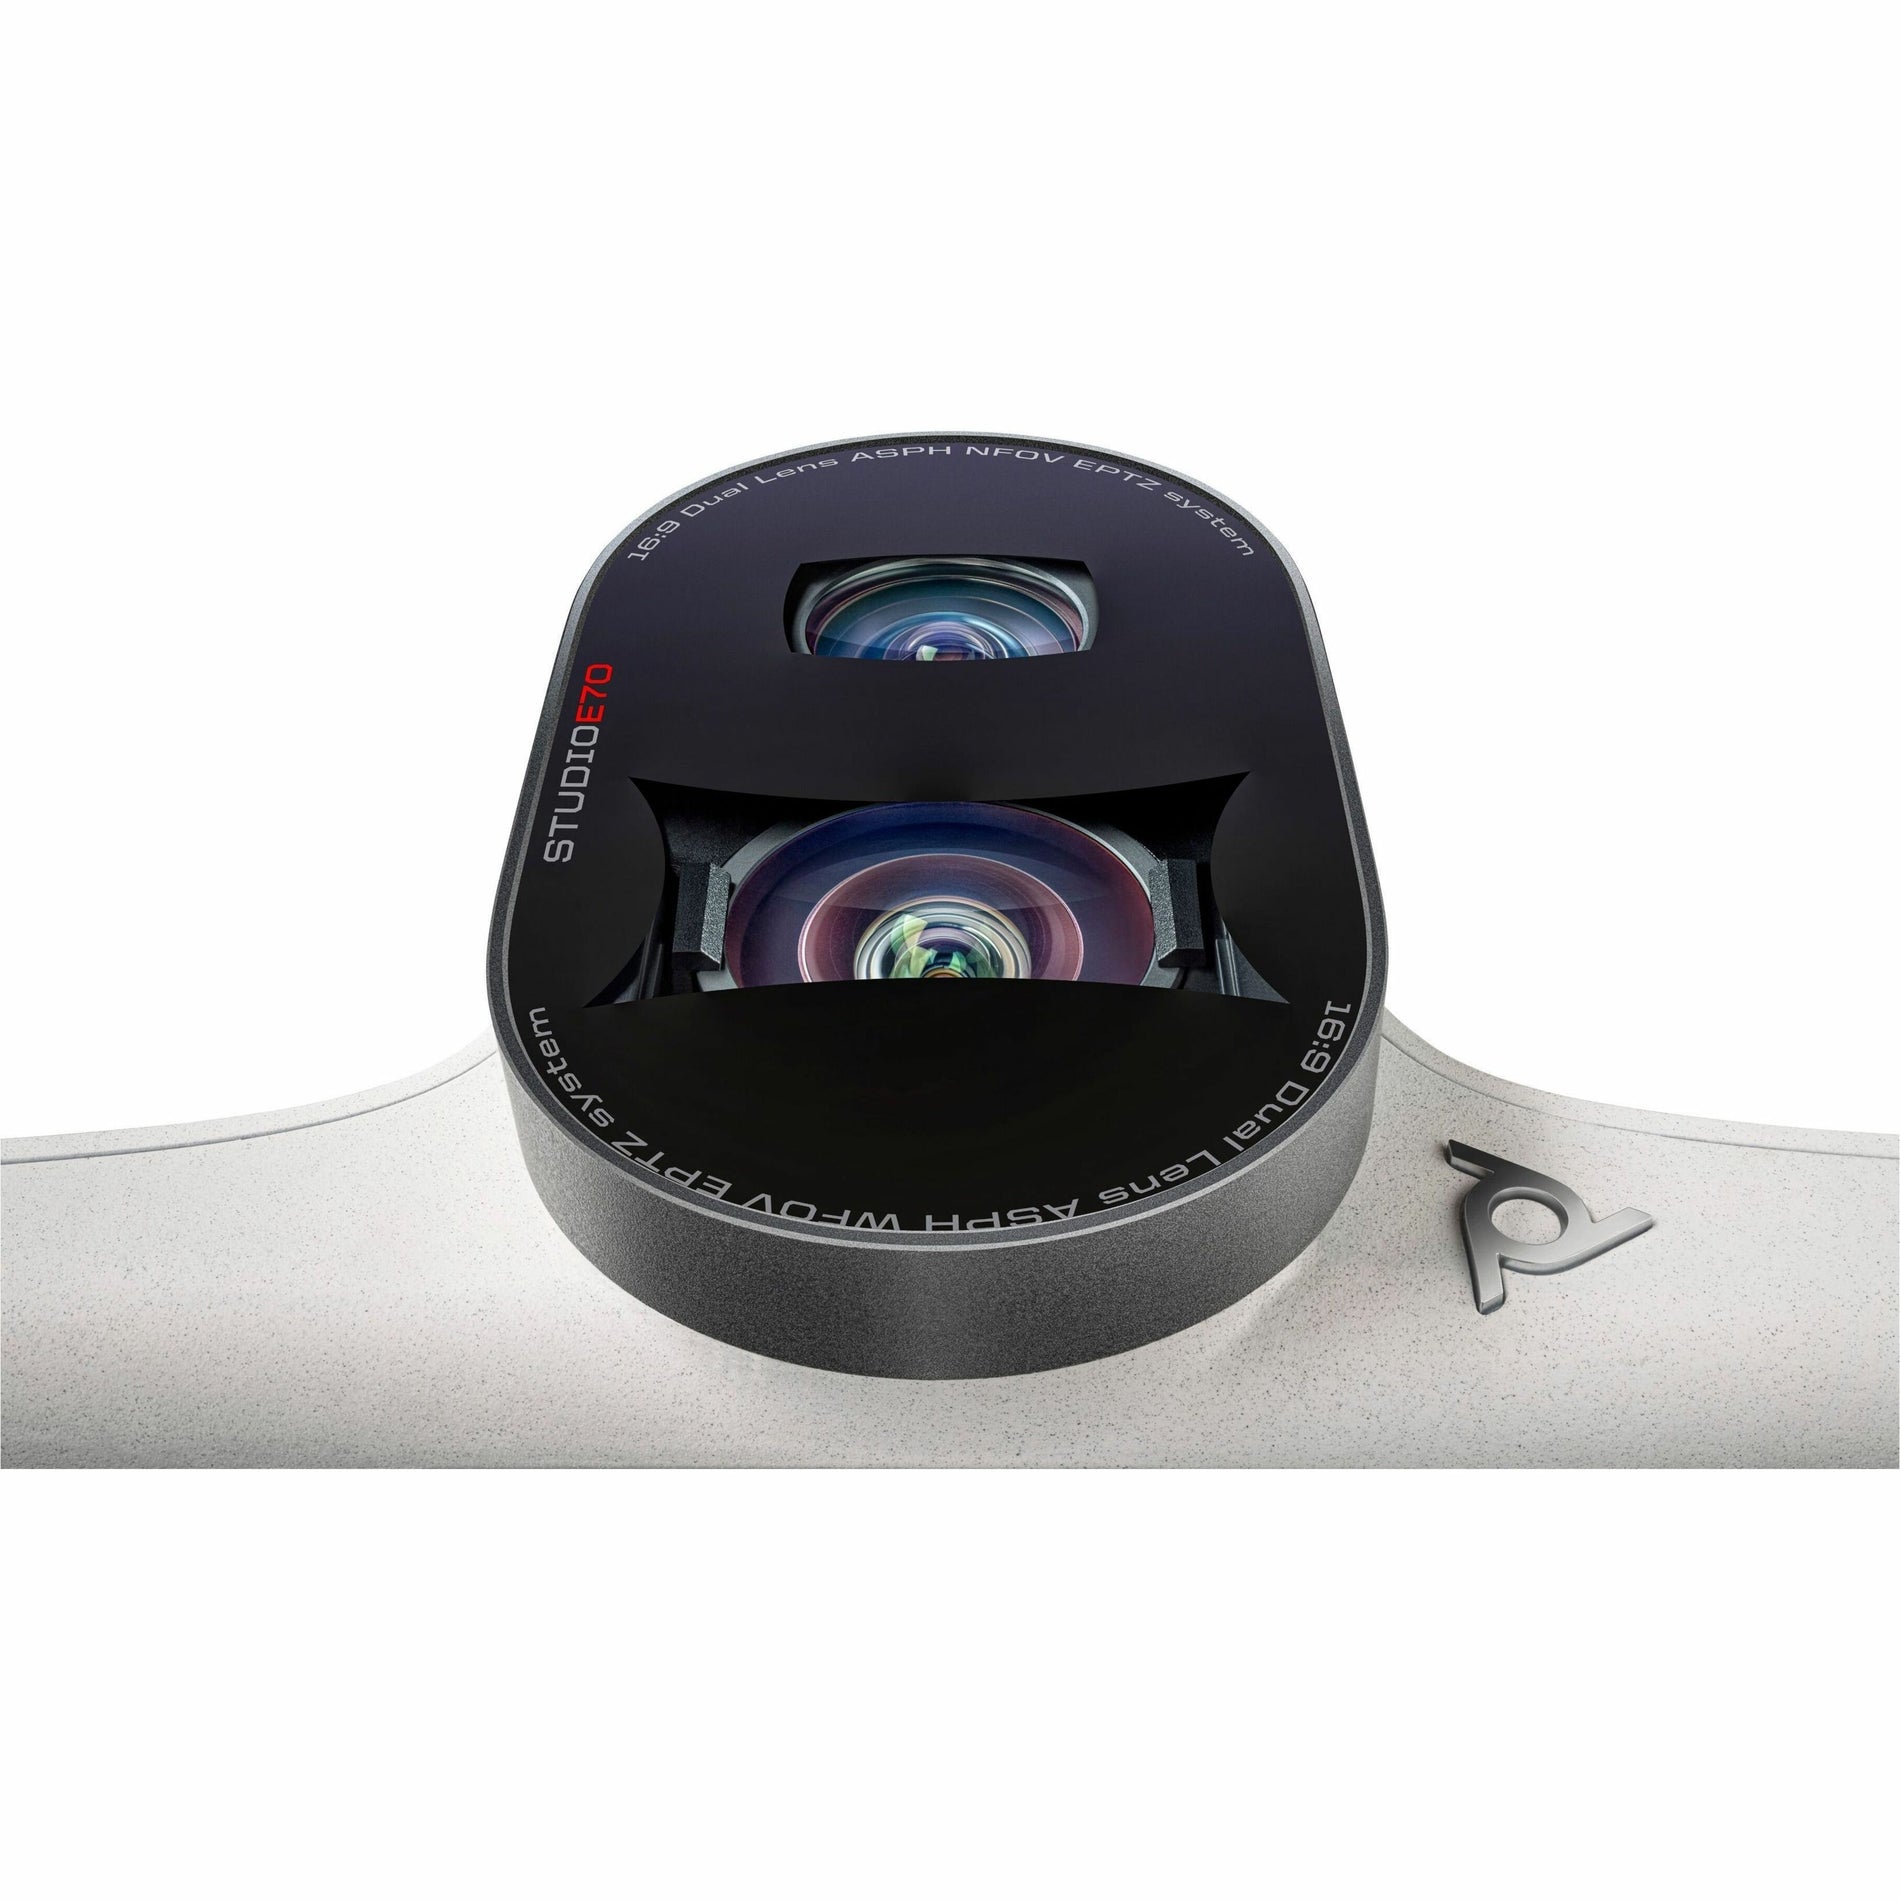 Poly 842F8AA Studio E70 Smart Kamera Hochwertige Webcam für Video Conferencing und Streaming